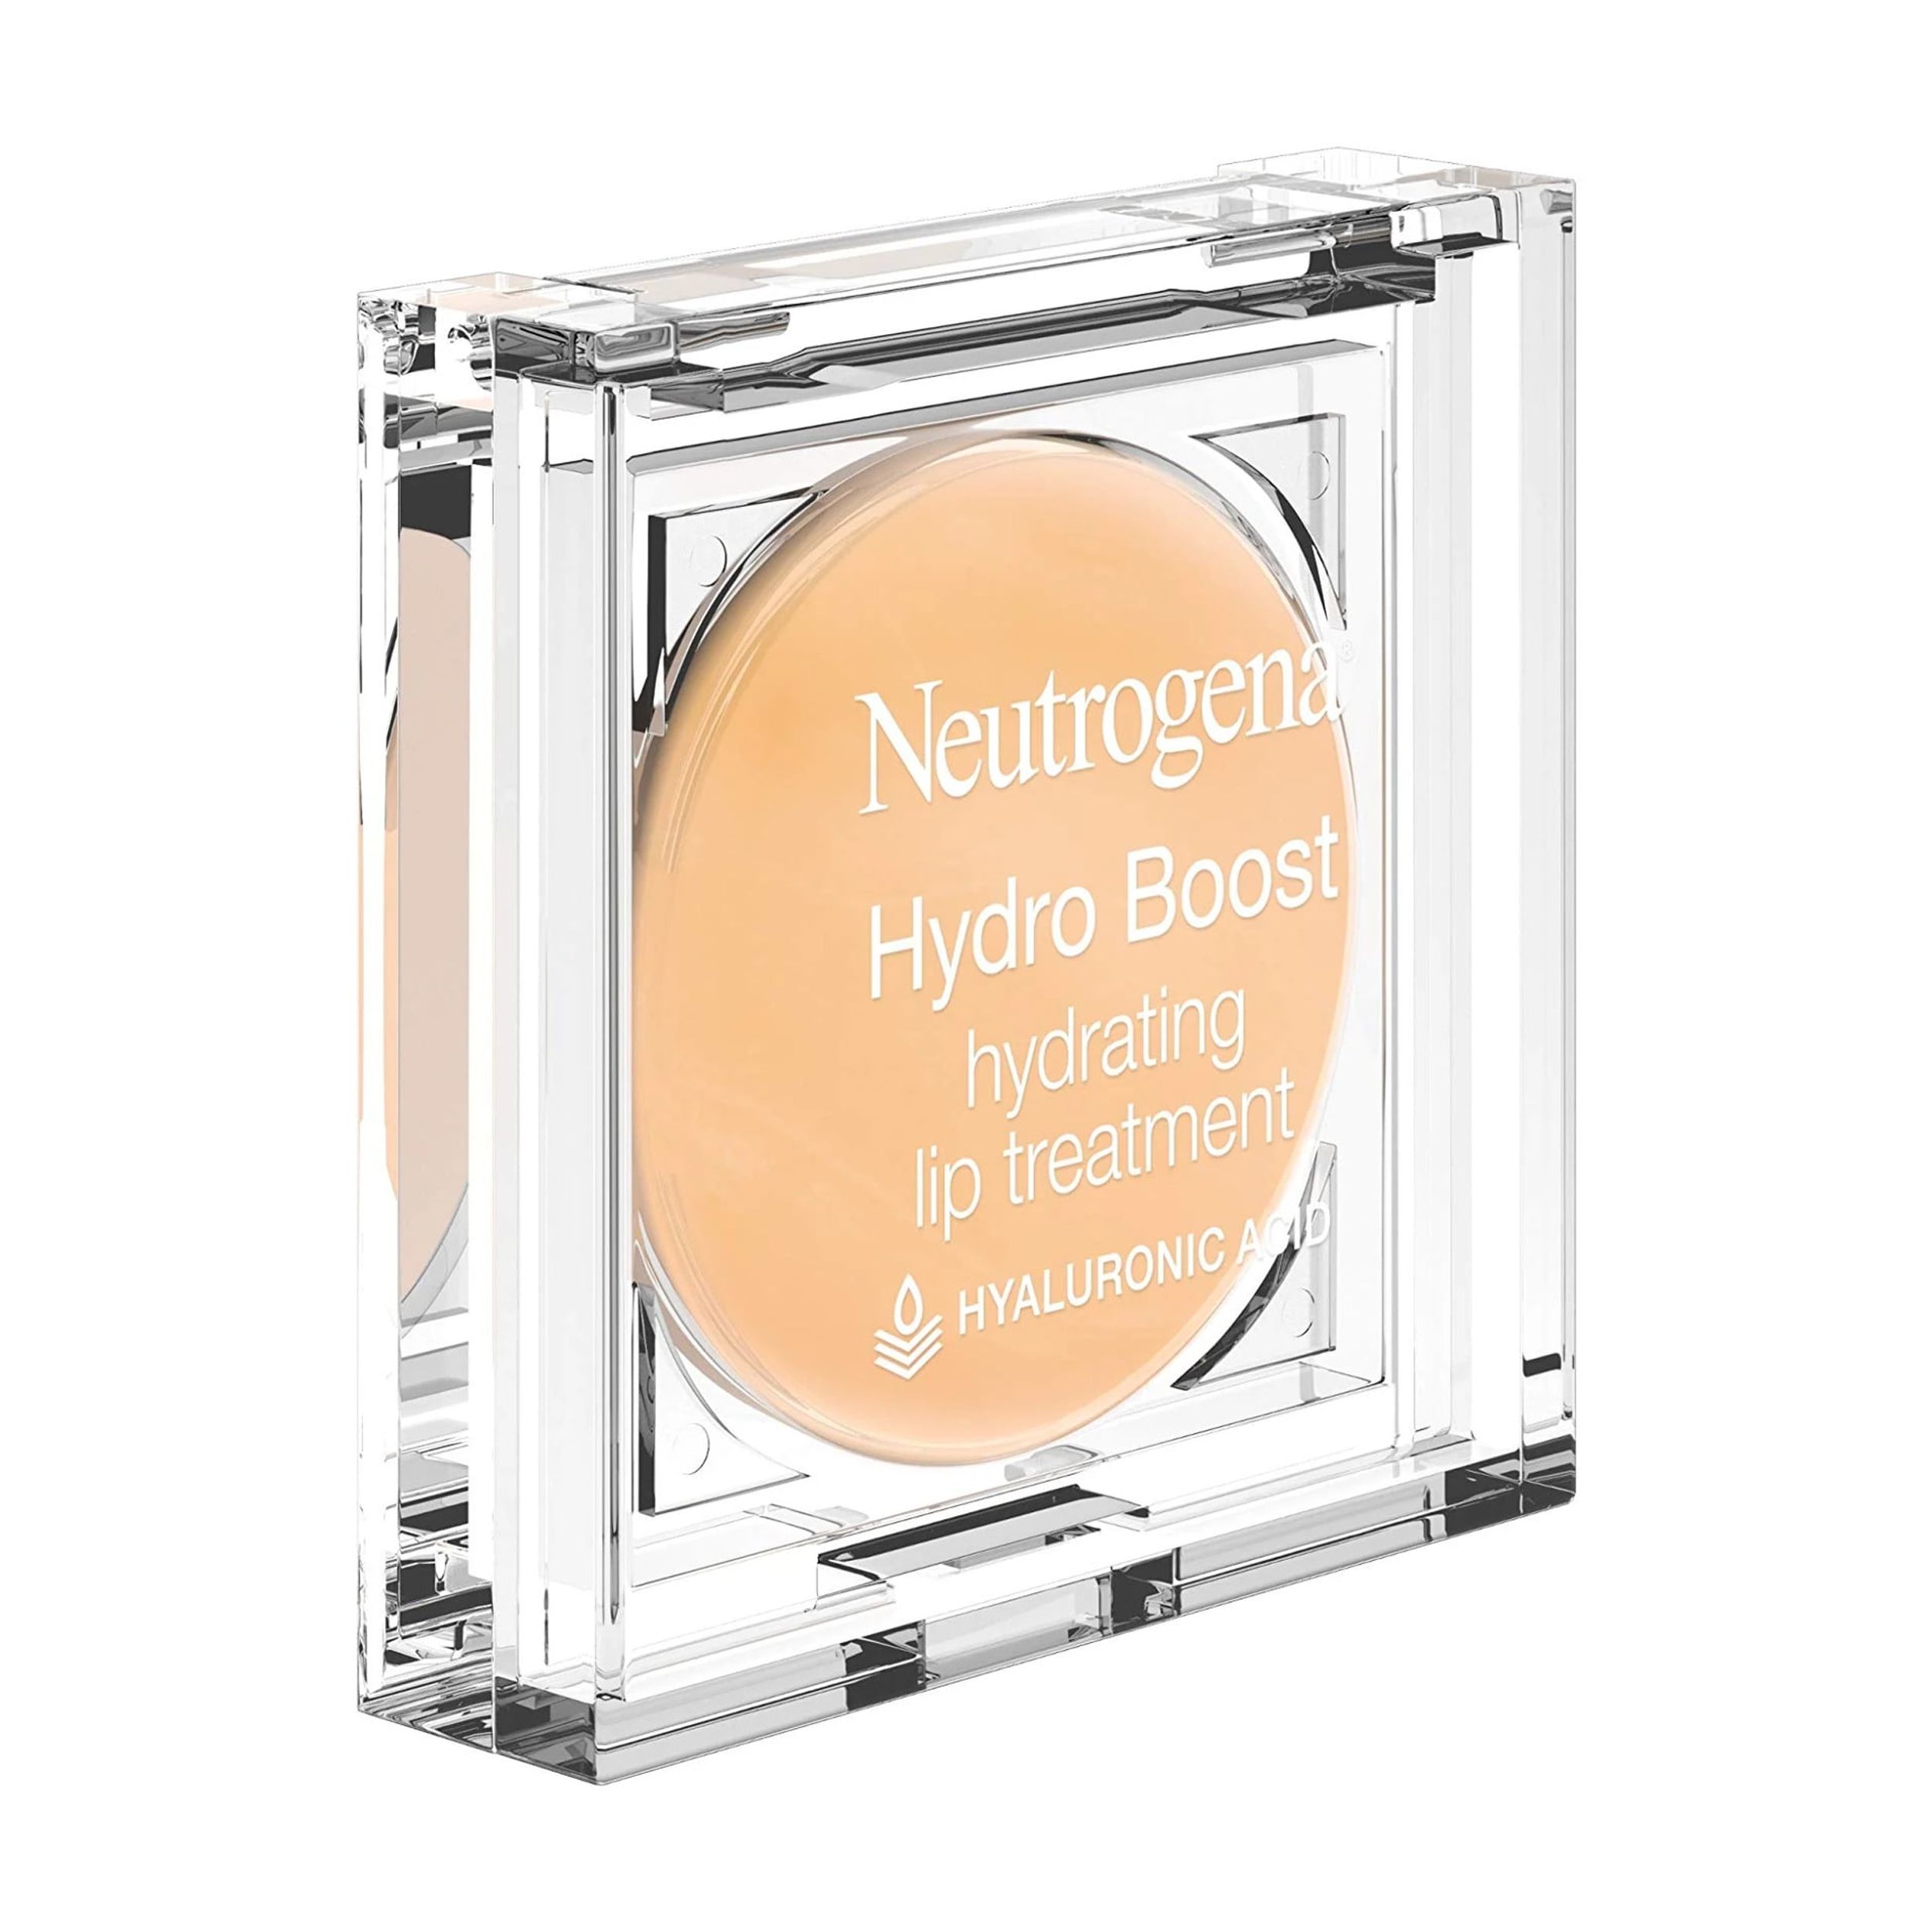 Neutrogena Hydro Boost Lip Treatment with Hyaluronic Acid, 0.10 Oz - image 4 of 9